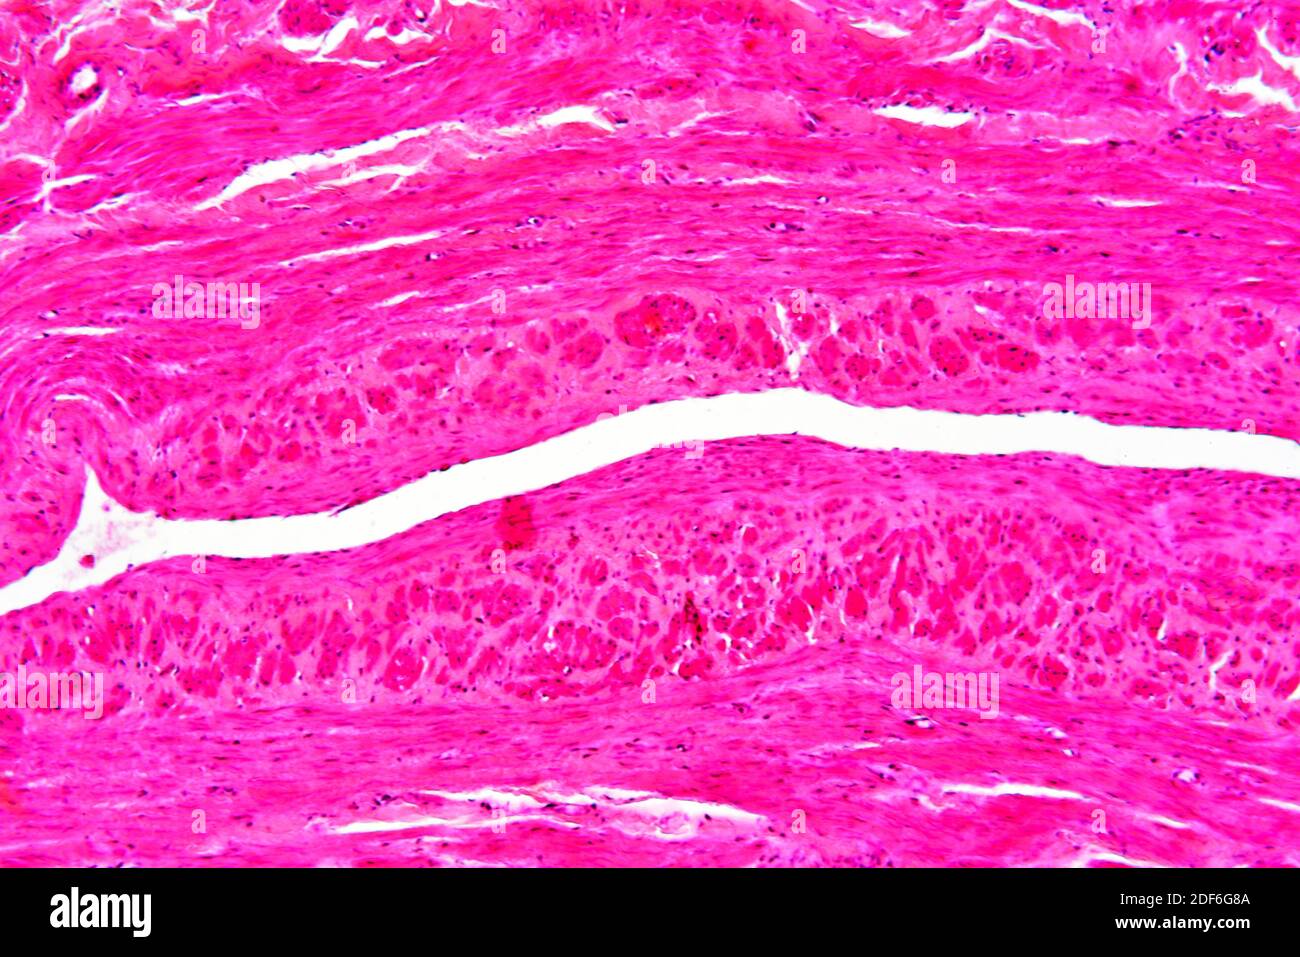 Human coronary artery with arteriosclerosis. Optical microscope X100. Stock Photo